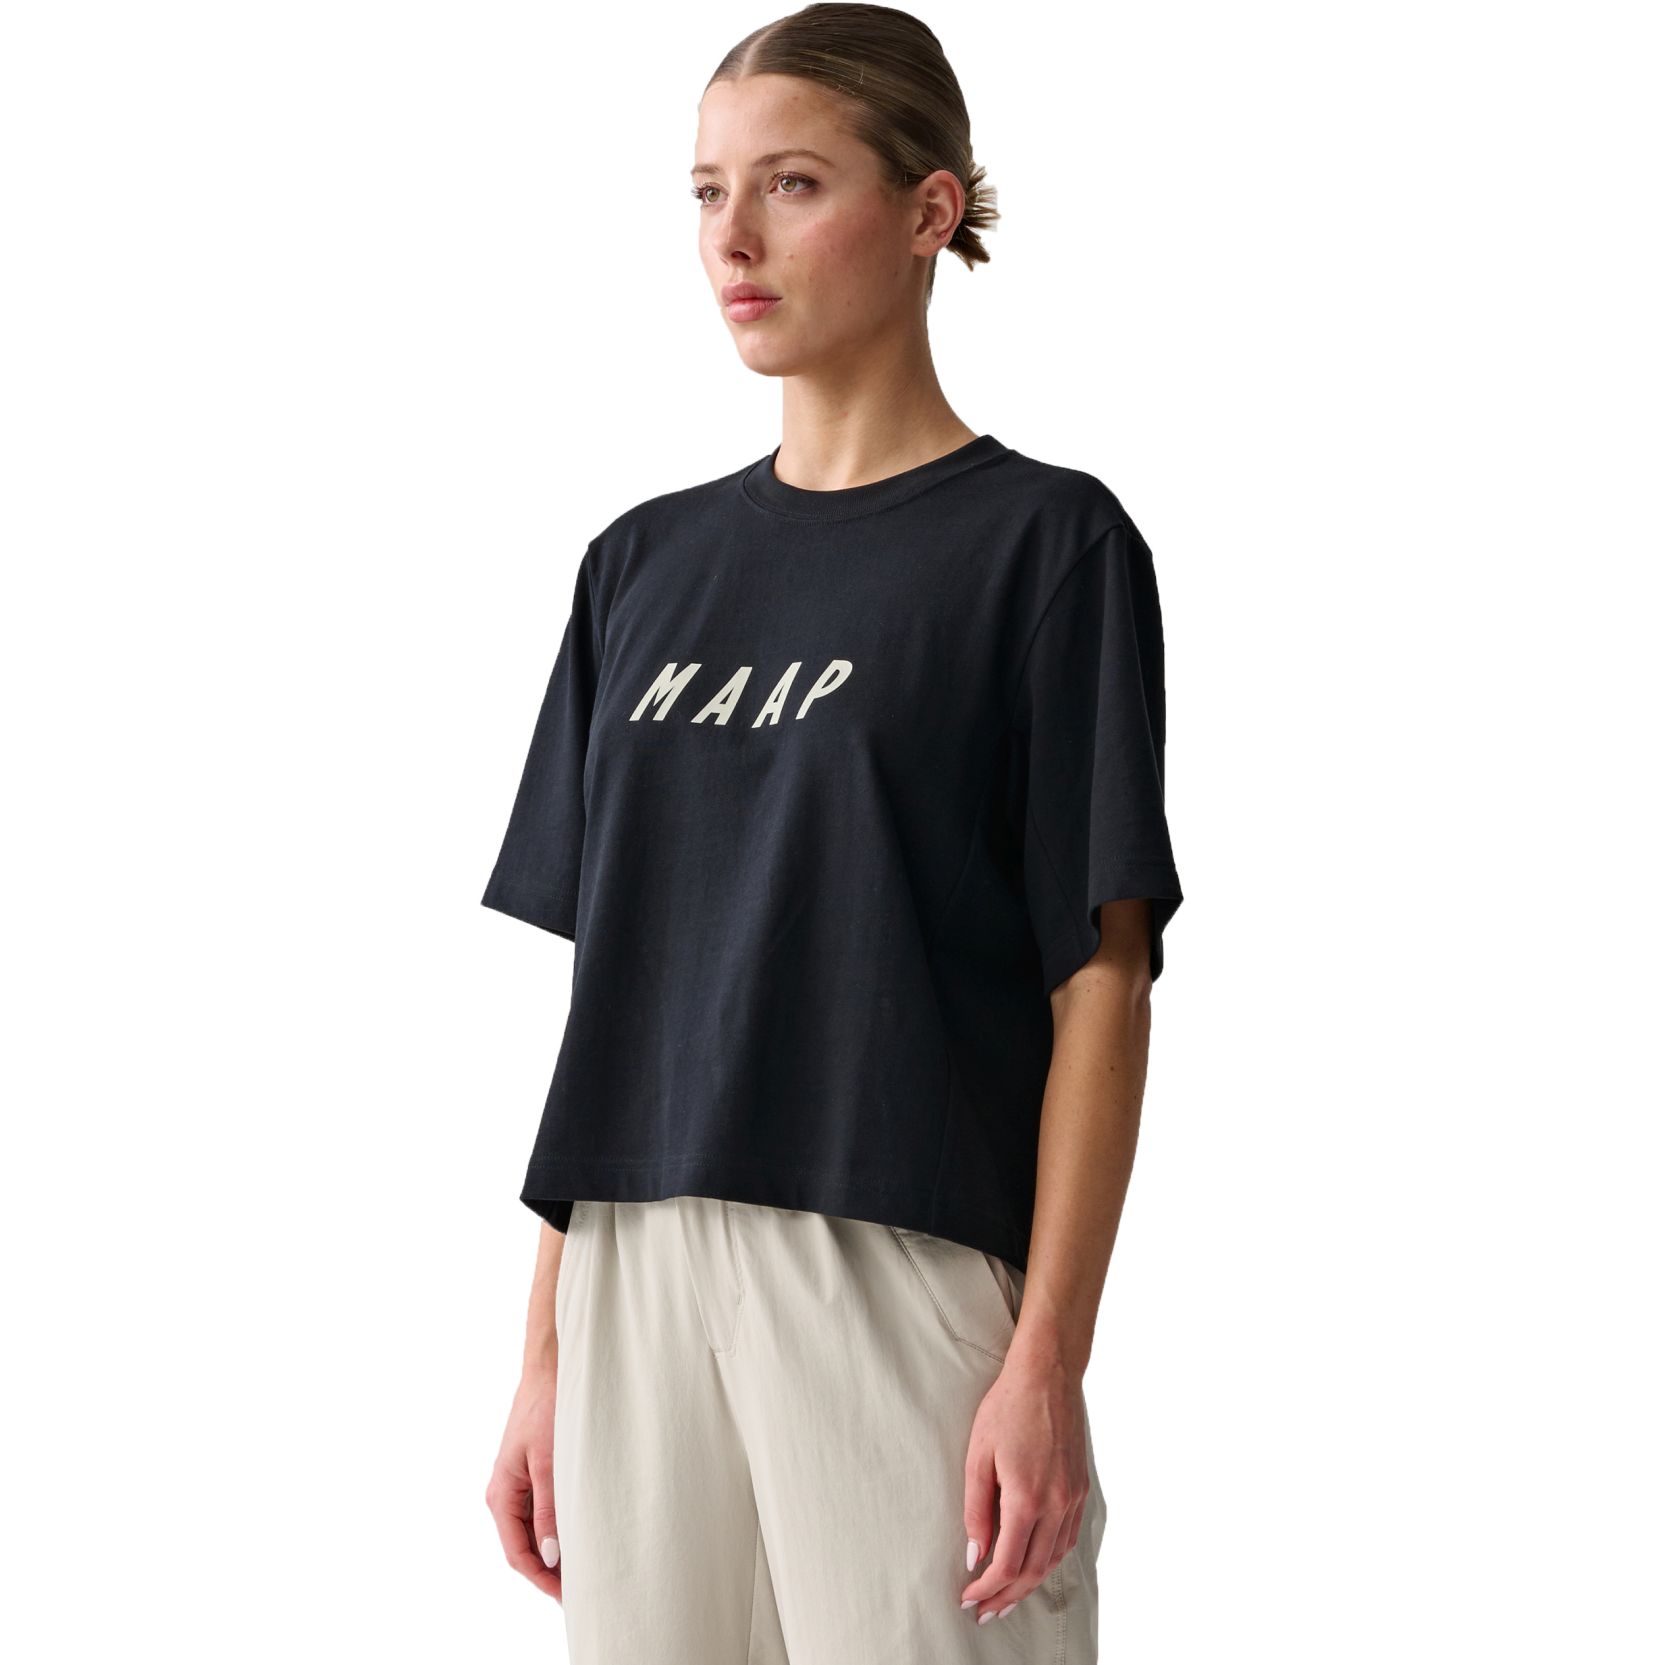 Produktbild von MAAP LPW Replica T-Shirt Damen - schwarz